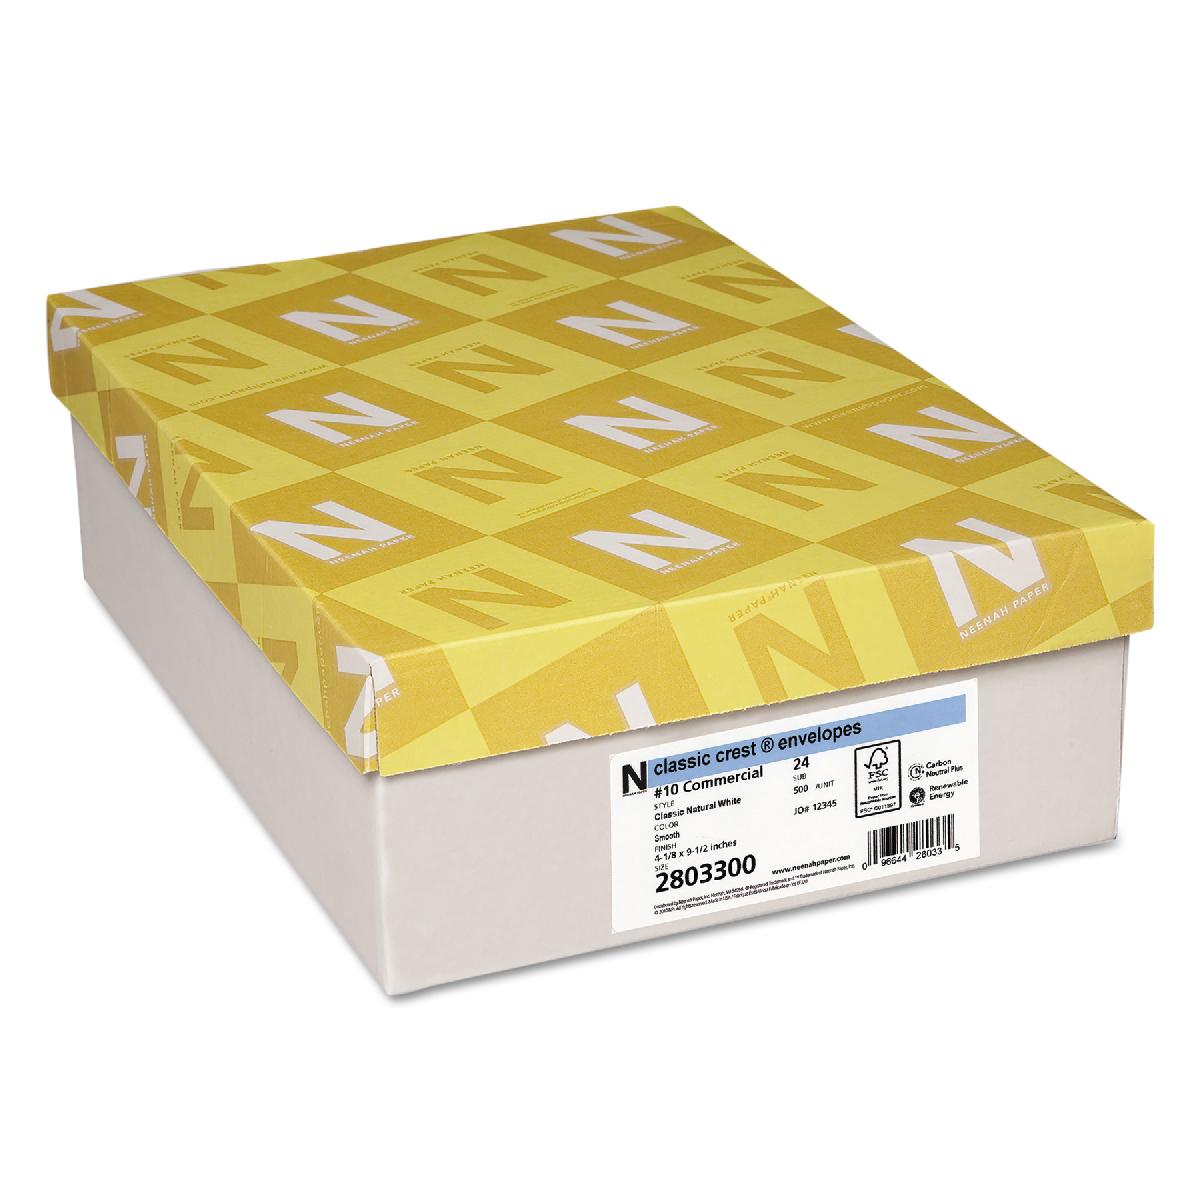 Neenah Paper® Capitol Bond Bright White Light Cockle 24 lb. No. 10 Envelope 500 per Box